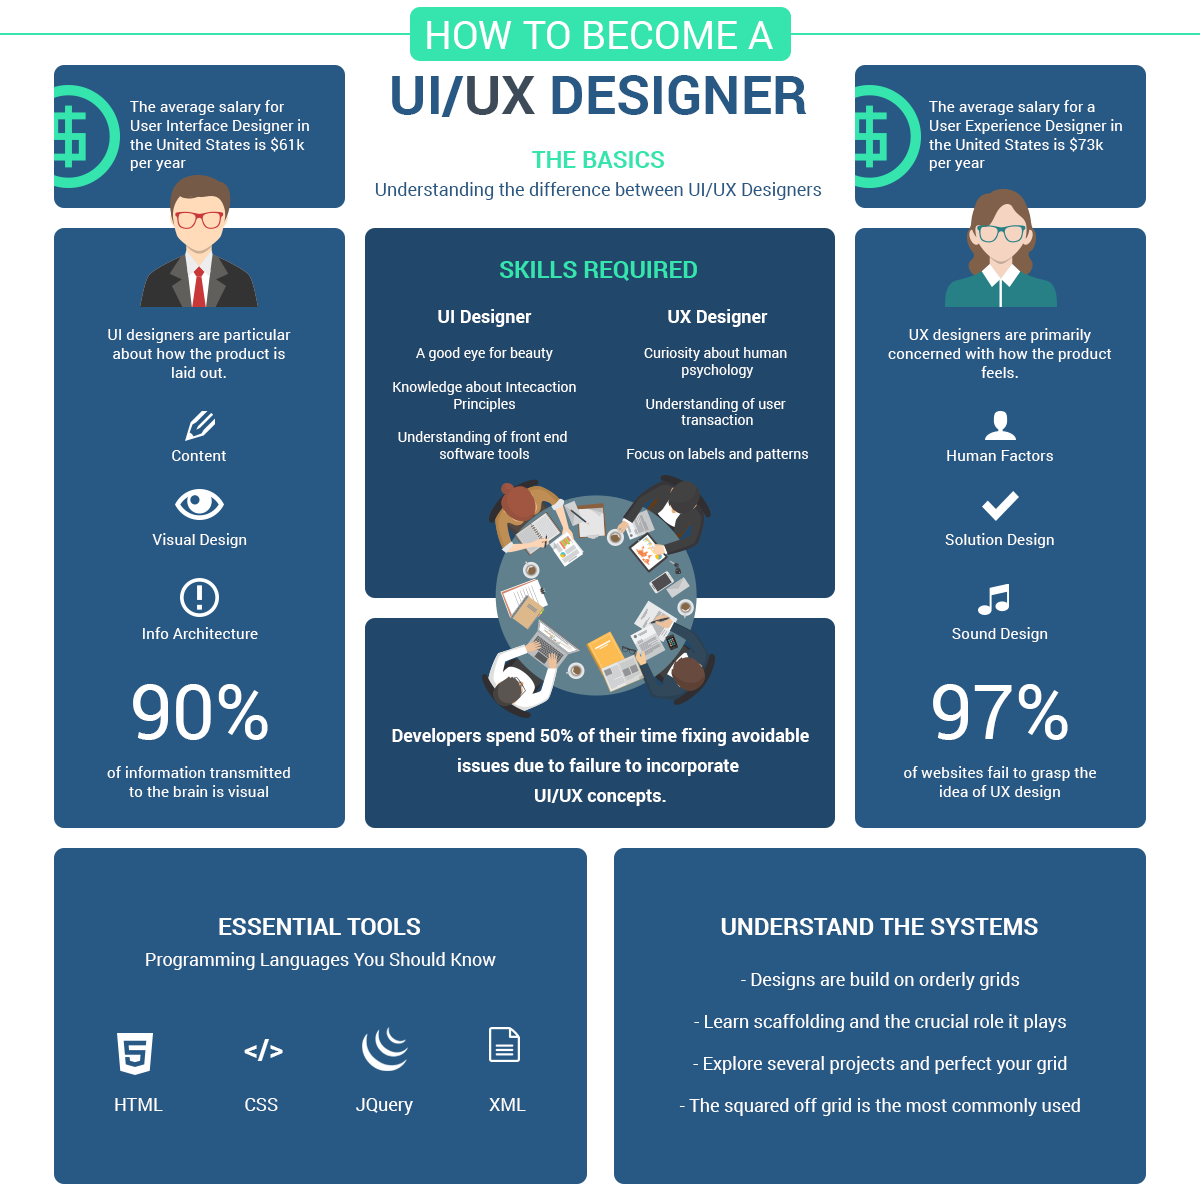 ux/ui design designcontest tips for designers infographic